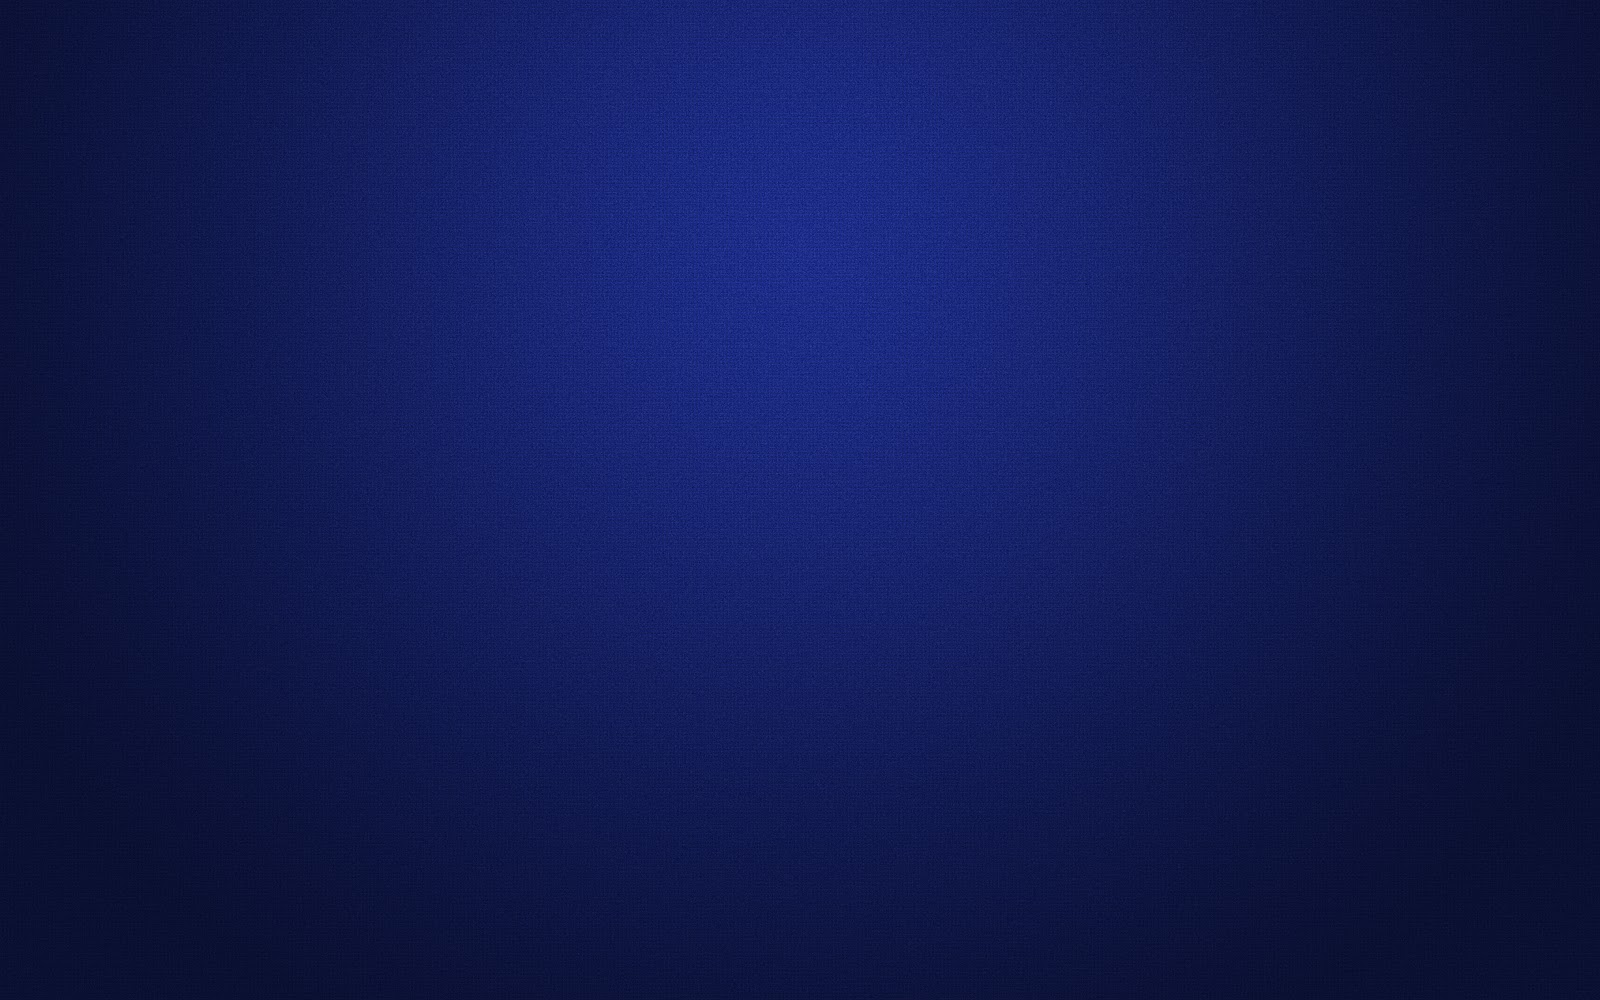   top desktop blue wallpapers blue wallpaper blue background hd 27jpg 1600x1000